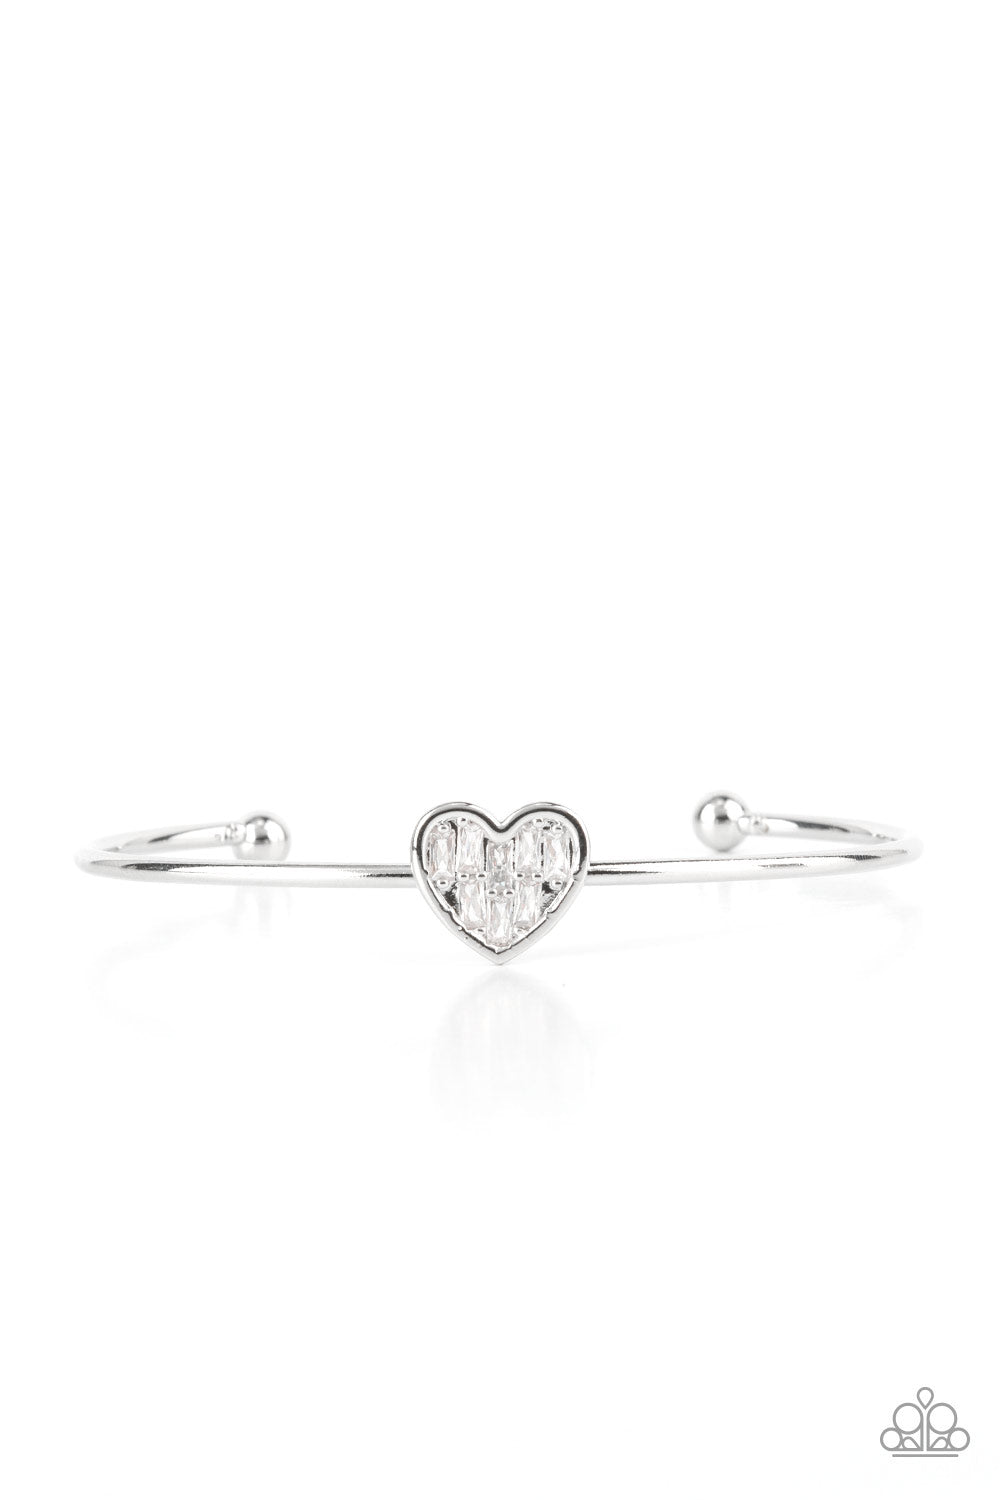 Heart of Ice - White Rhinestone (Silver Heart) Bracelet freeshipping - JewLz4u Gemstone Gallery